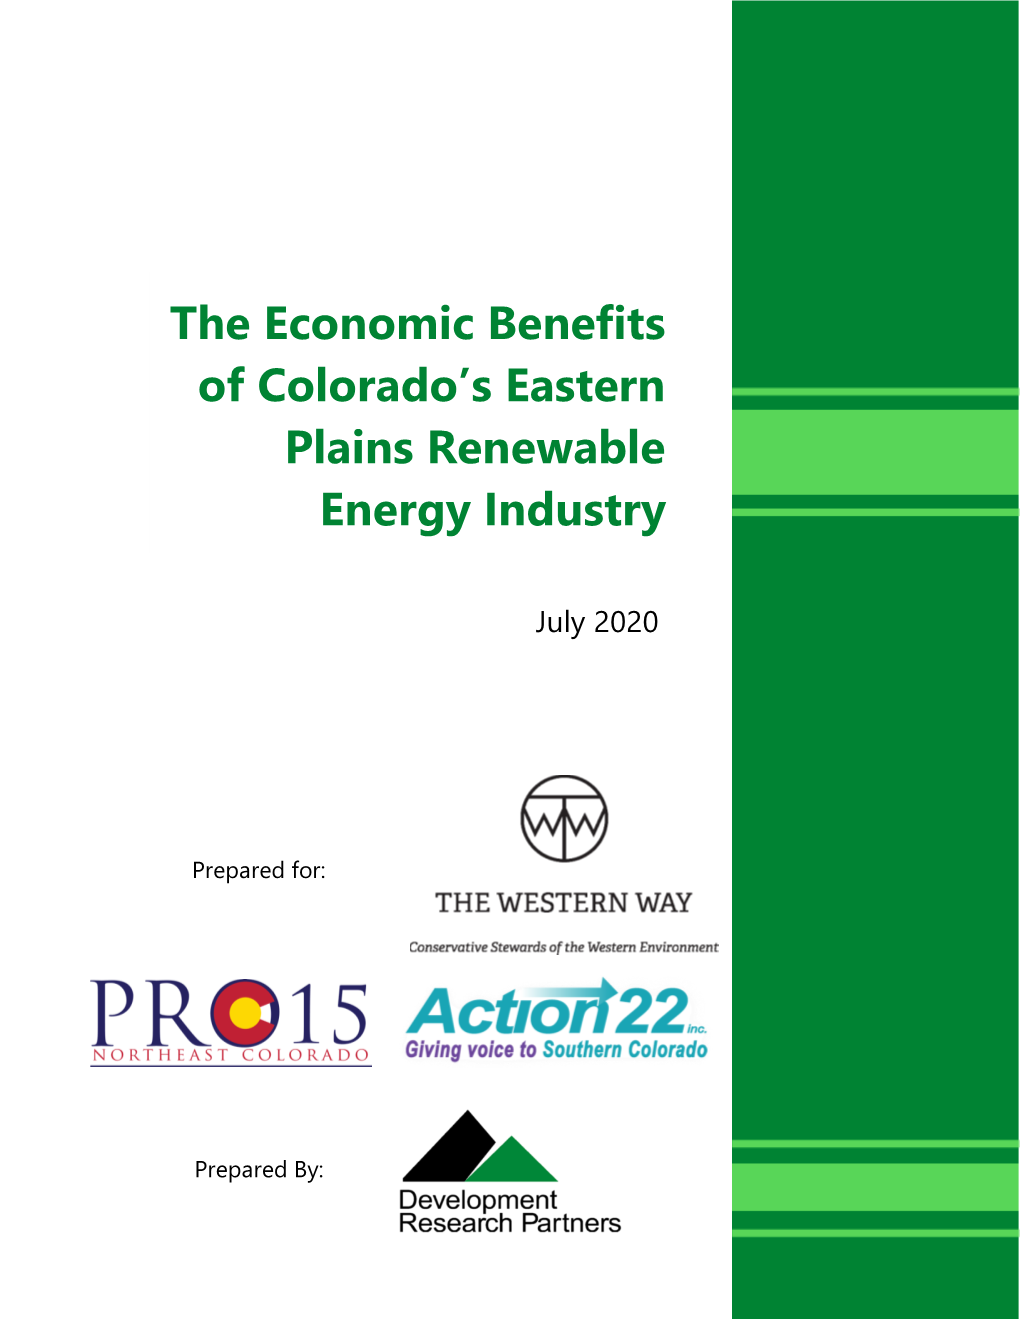 The Economic Benefits of Colorado's Eastern Plains Renewable Energy Industry